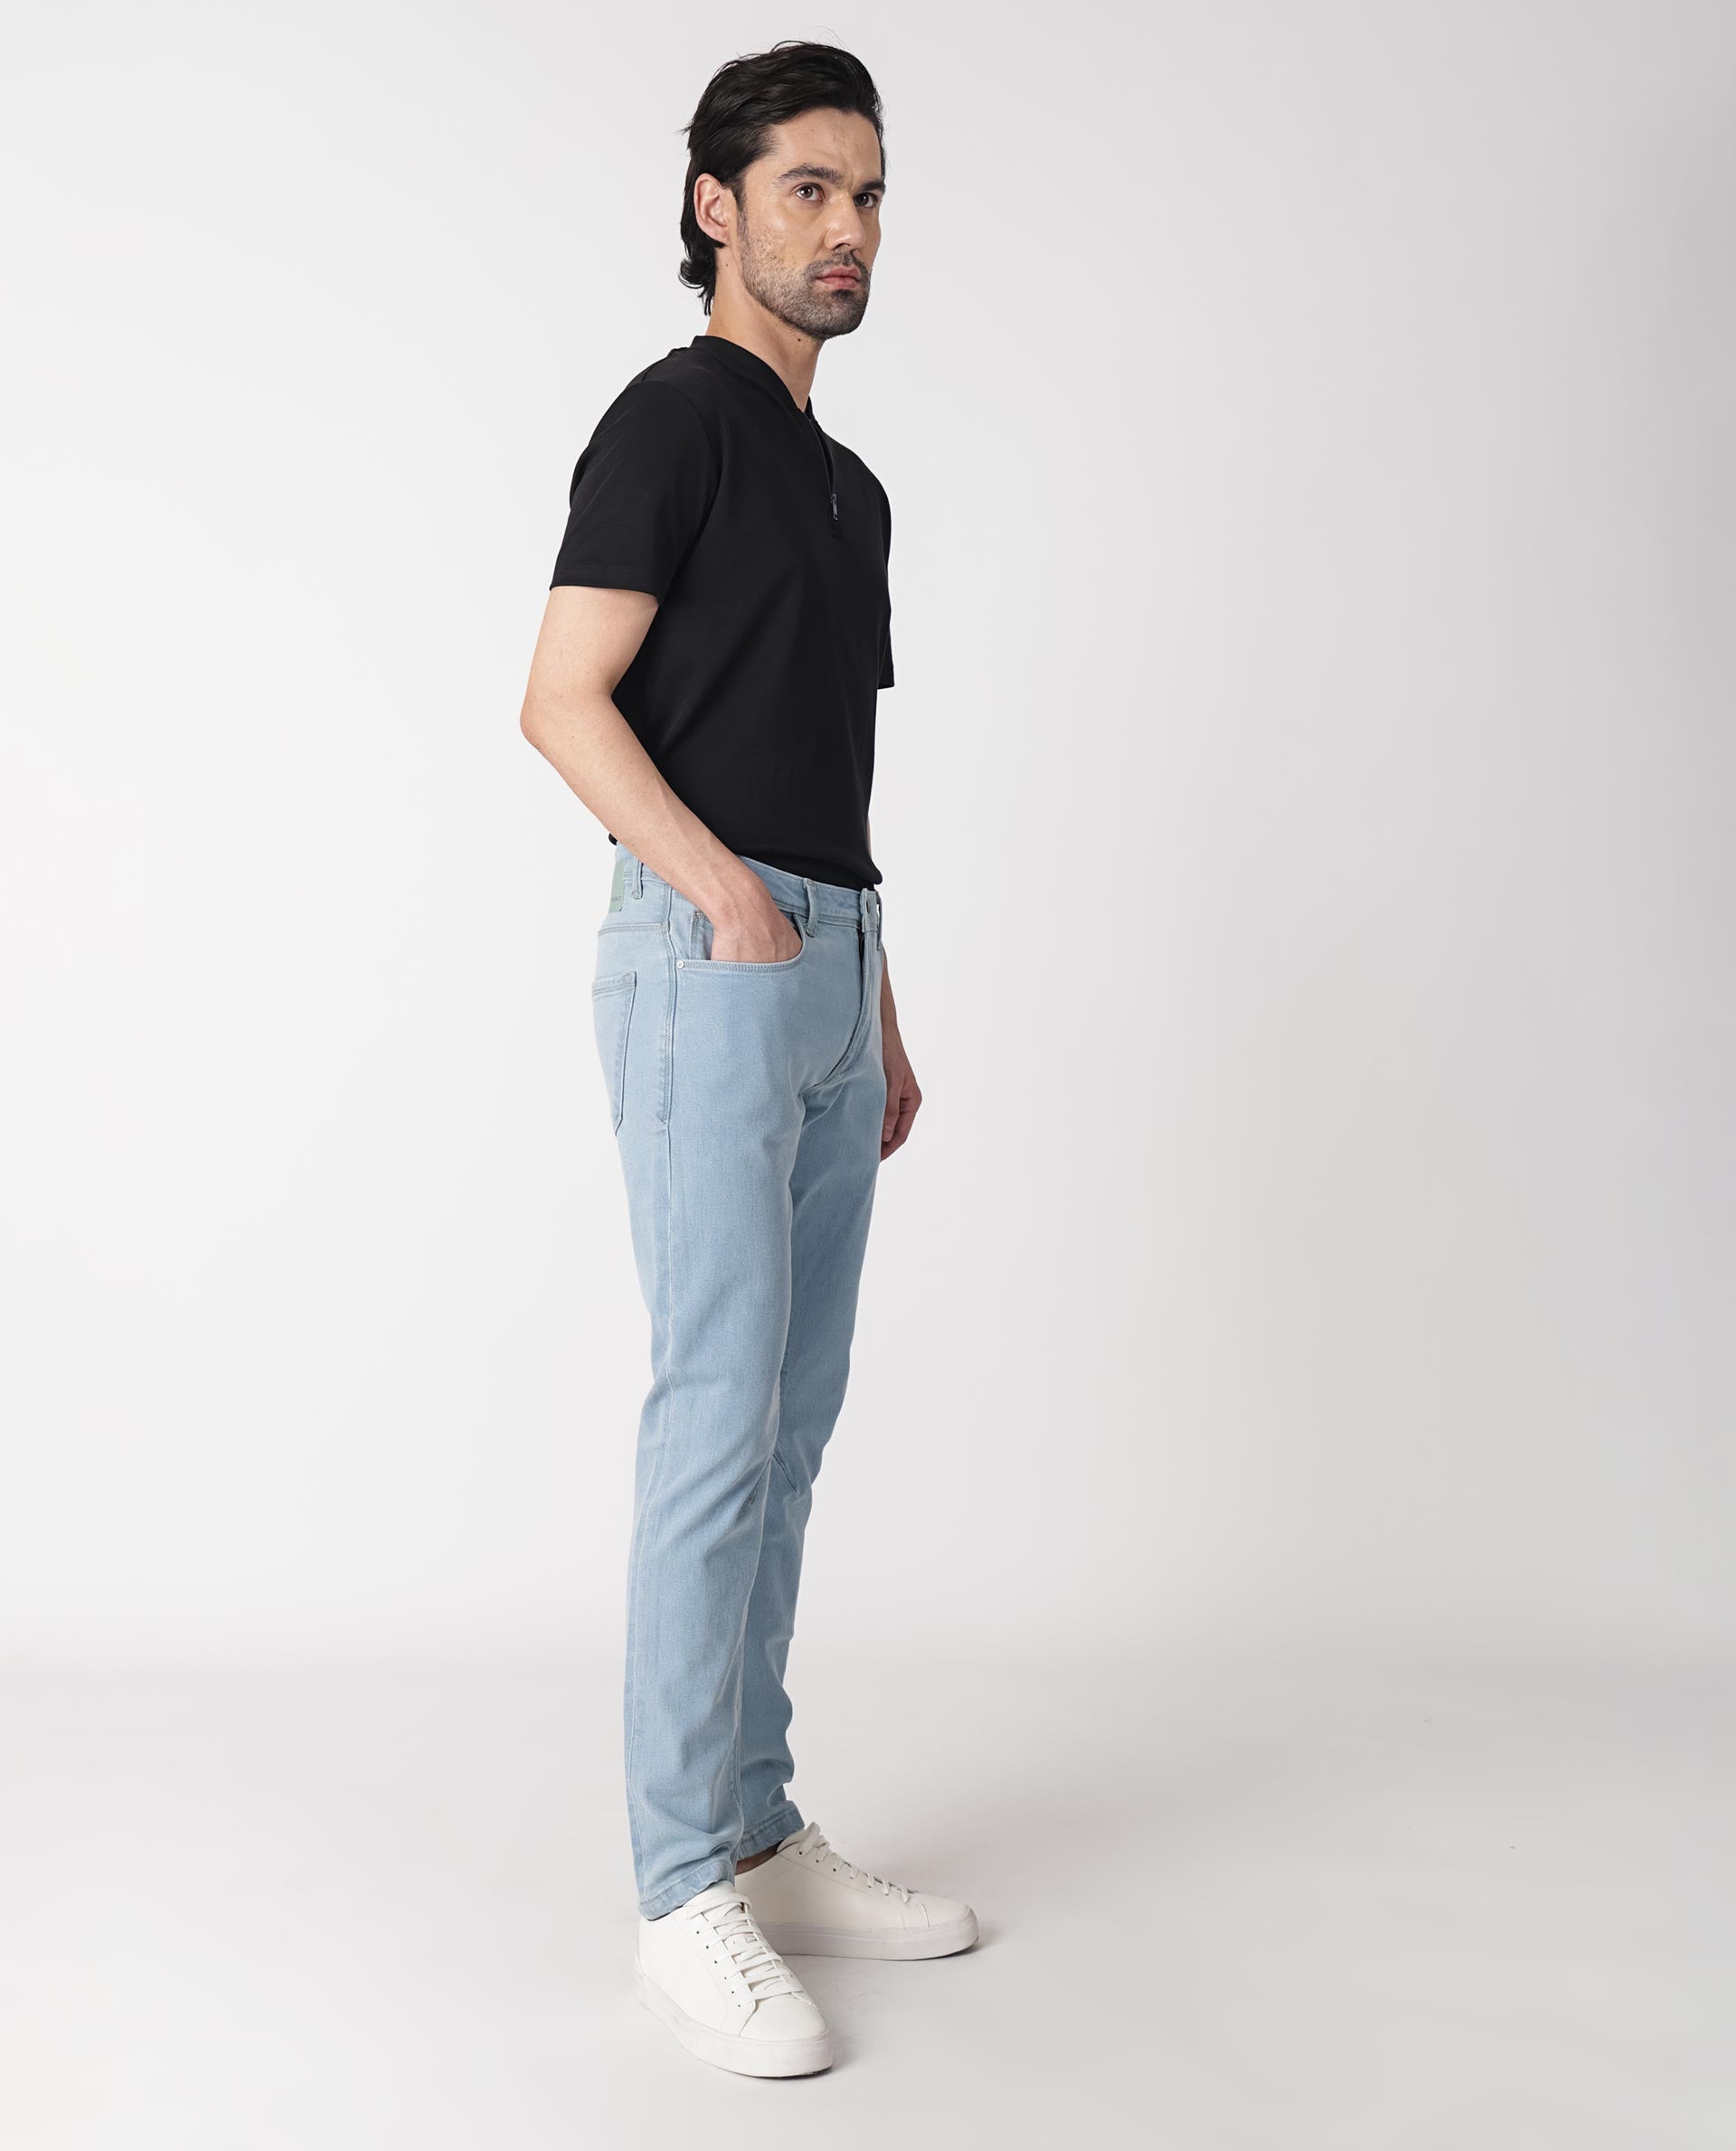 Buy KUONS AVENUE Solid Denim Slim Fit Men's Casual Shirt | Shoppers Stop